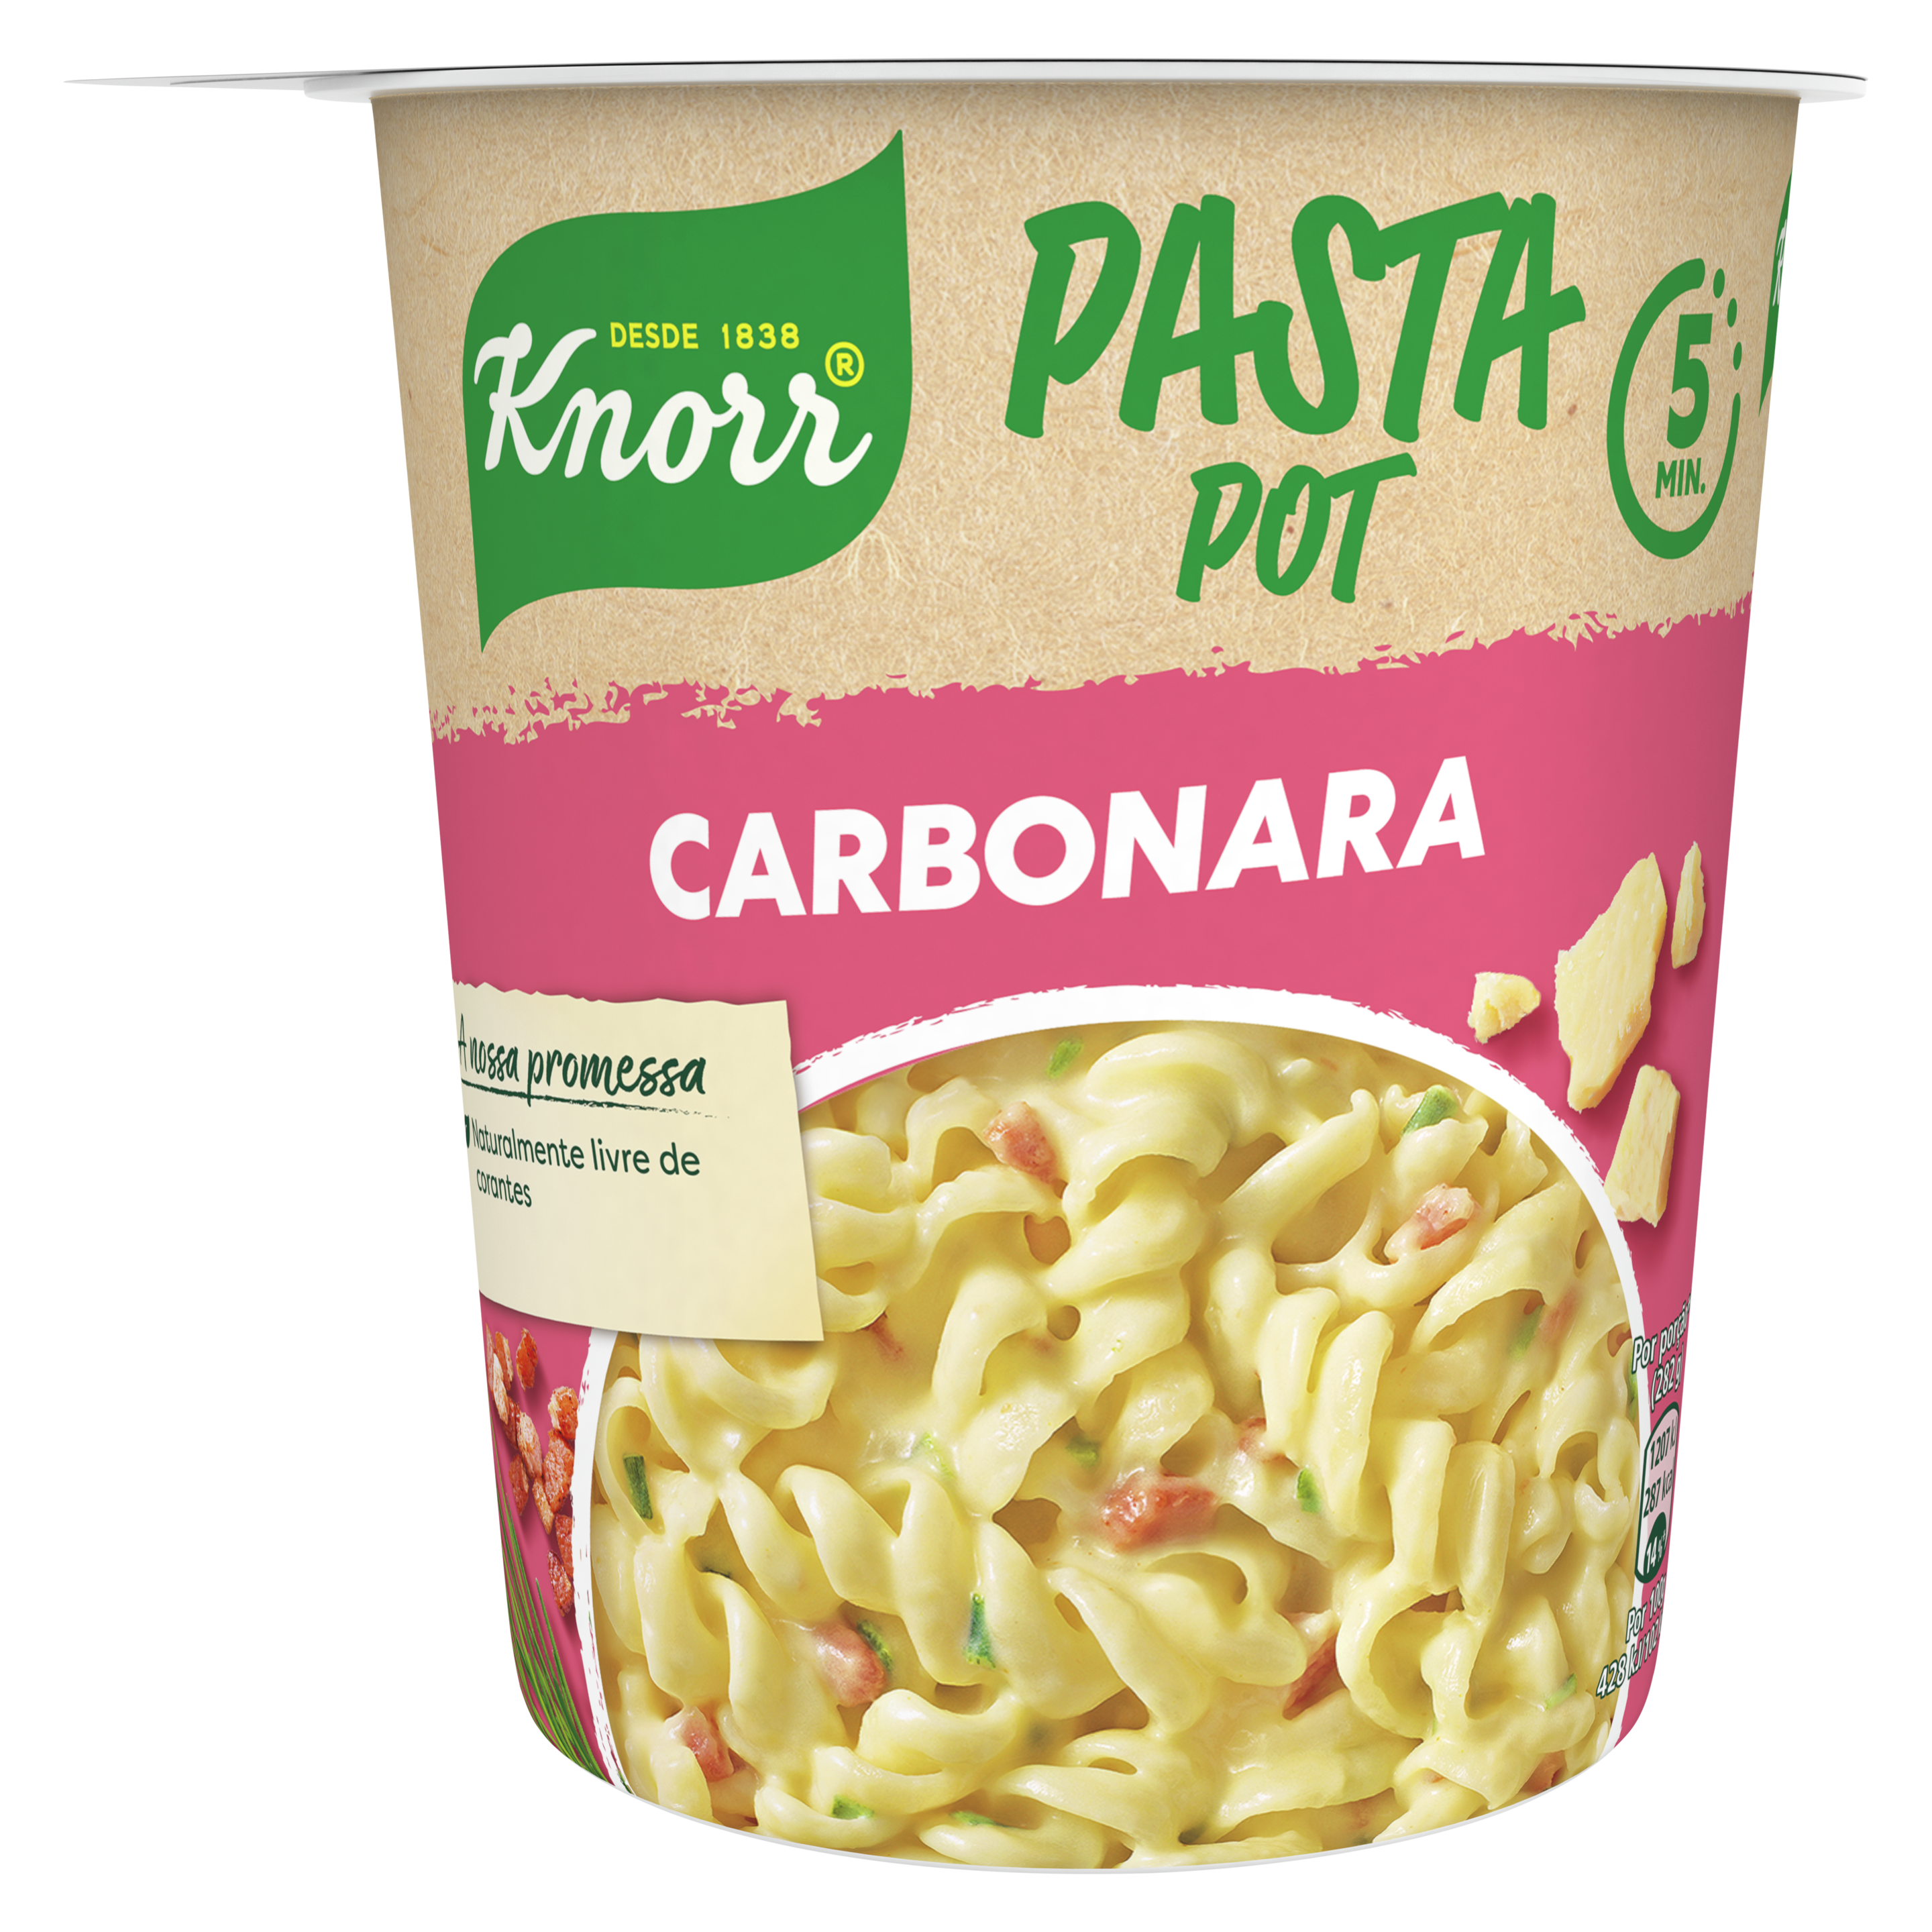 Pasta Pot Carbonara